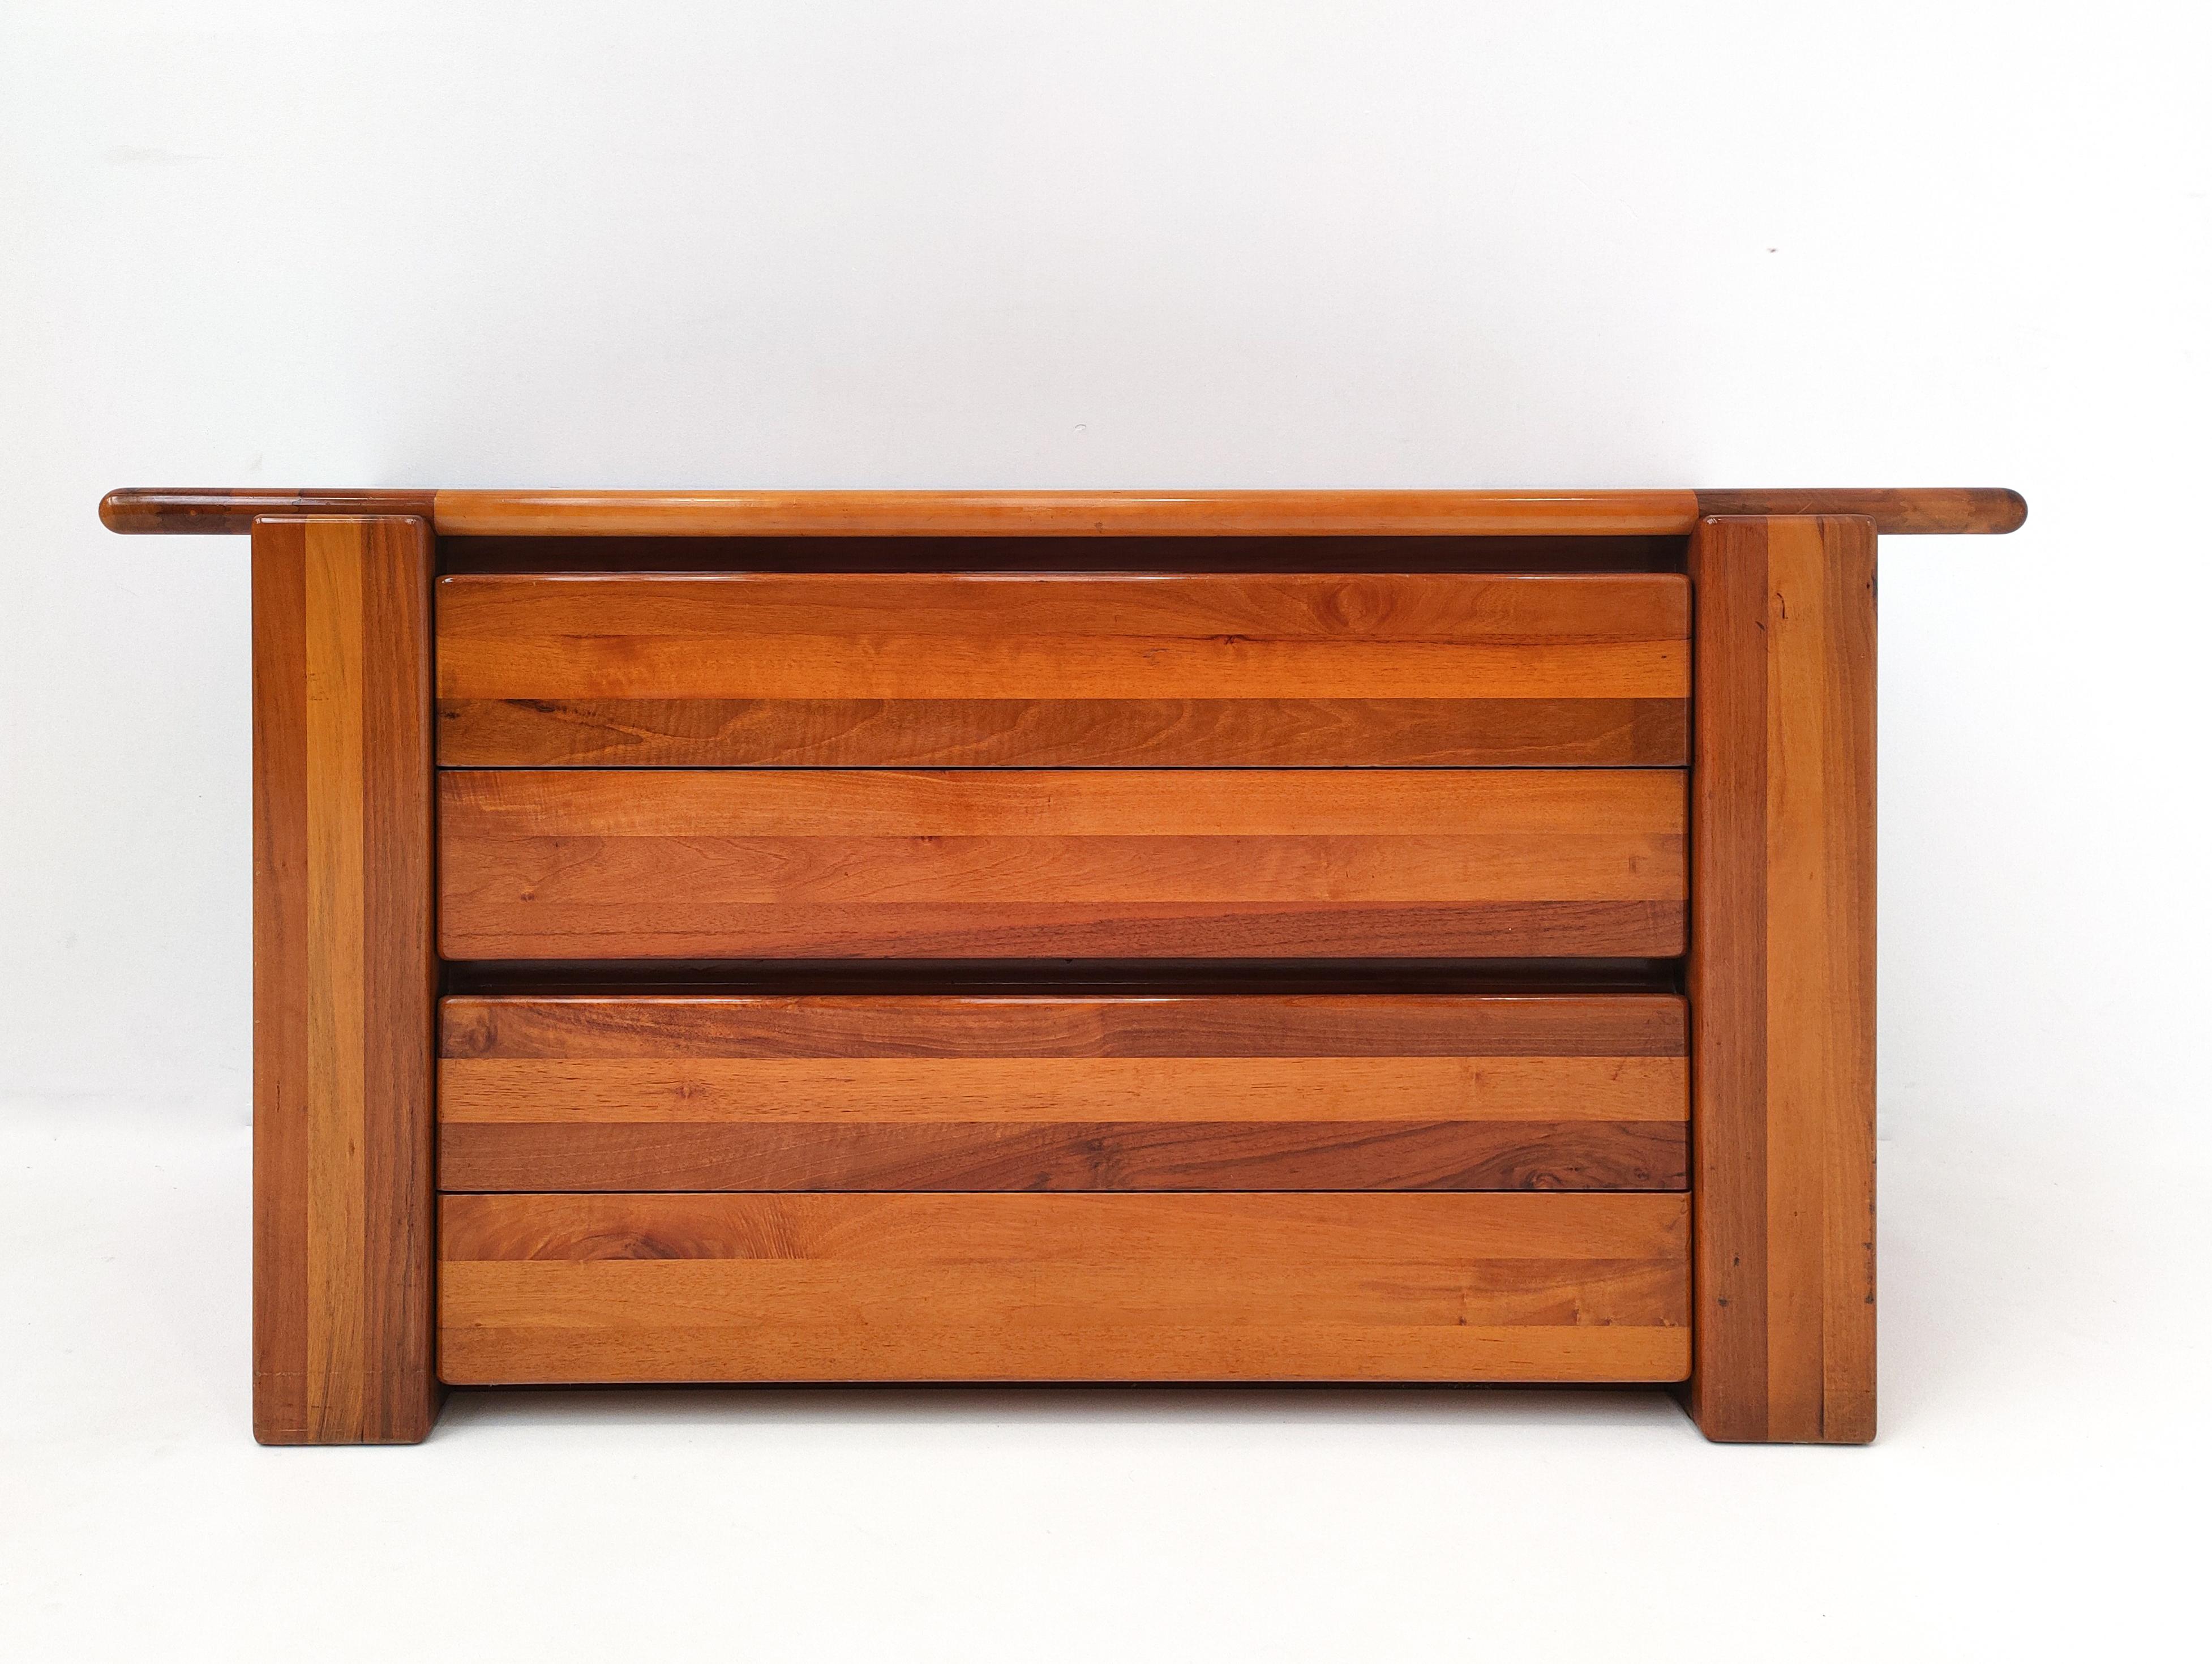 Wood Mario Marenco 'Sapporo' Sideboard for Mobilgirgi, Italy 1970s For Sale